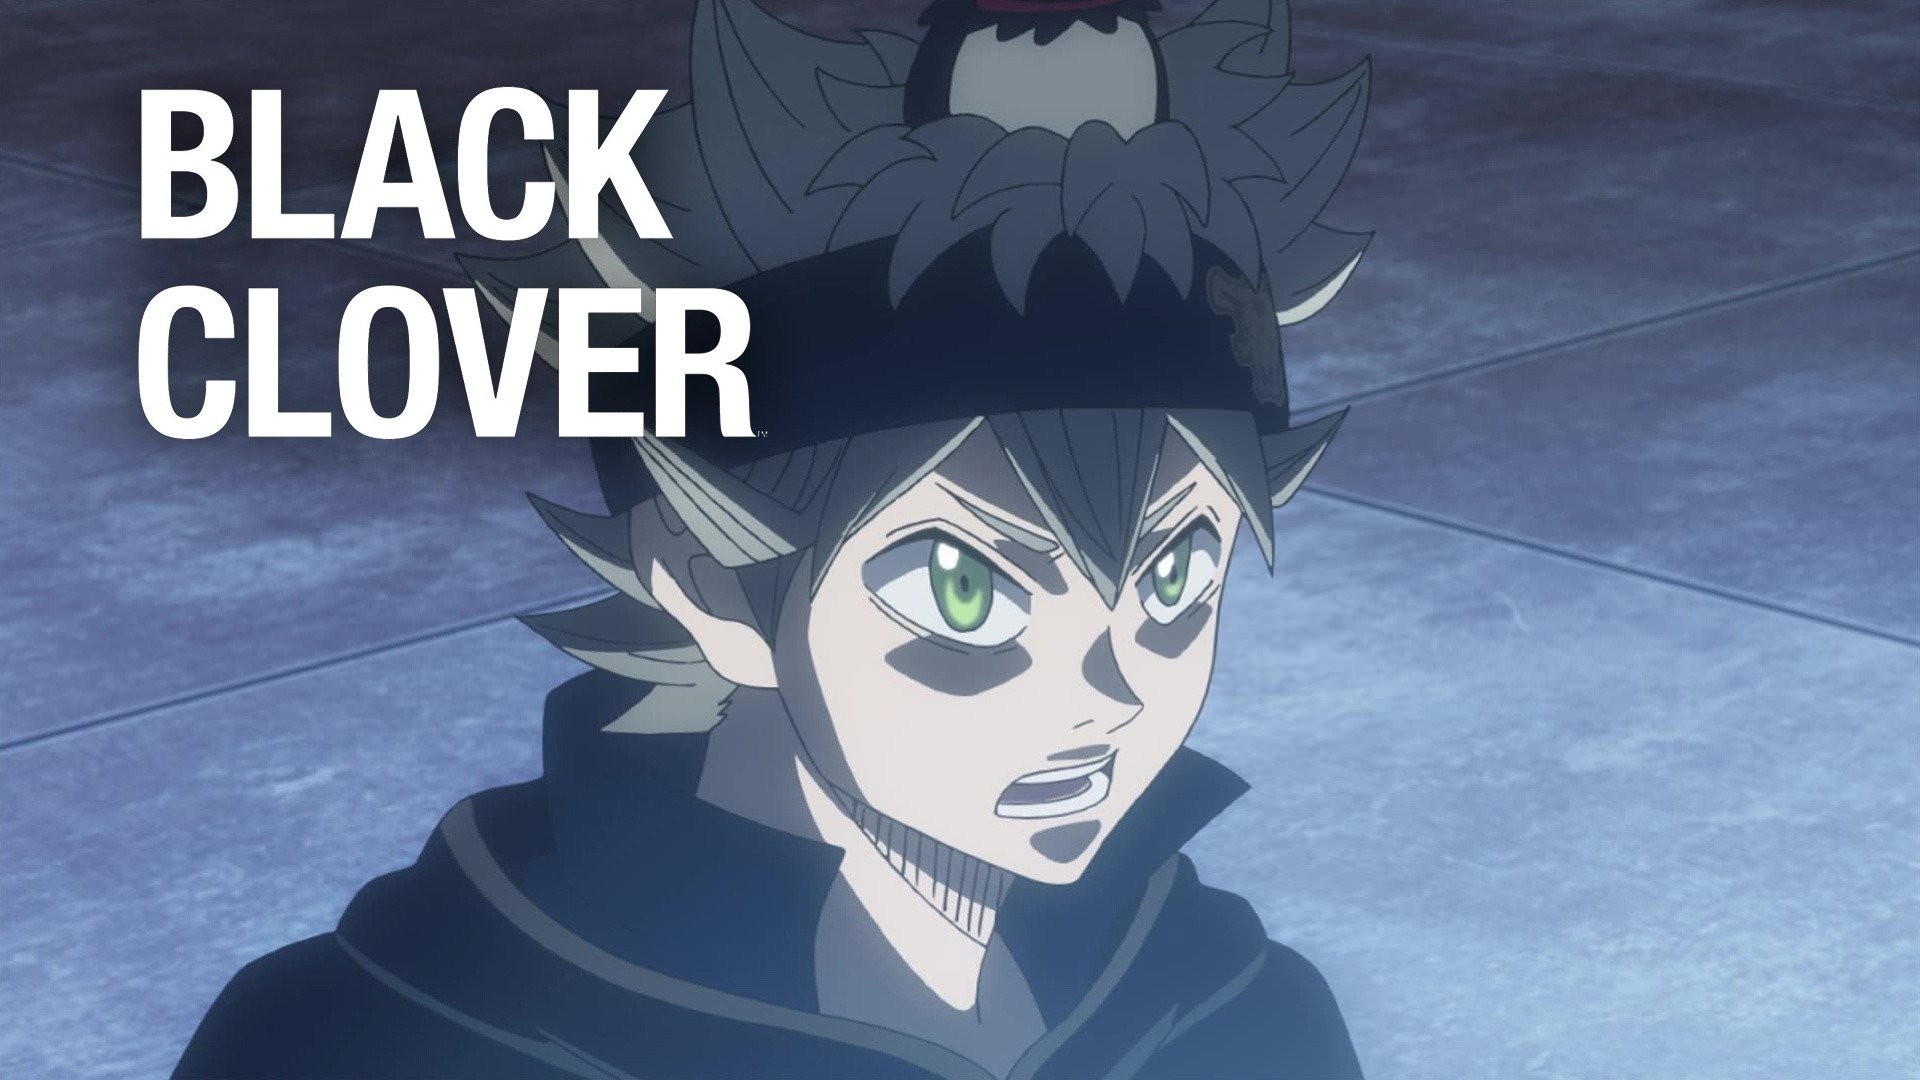 Watch Black Clover season 1 episode 1 streaming online